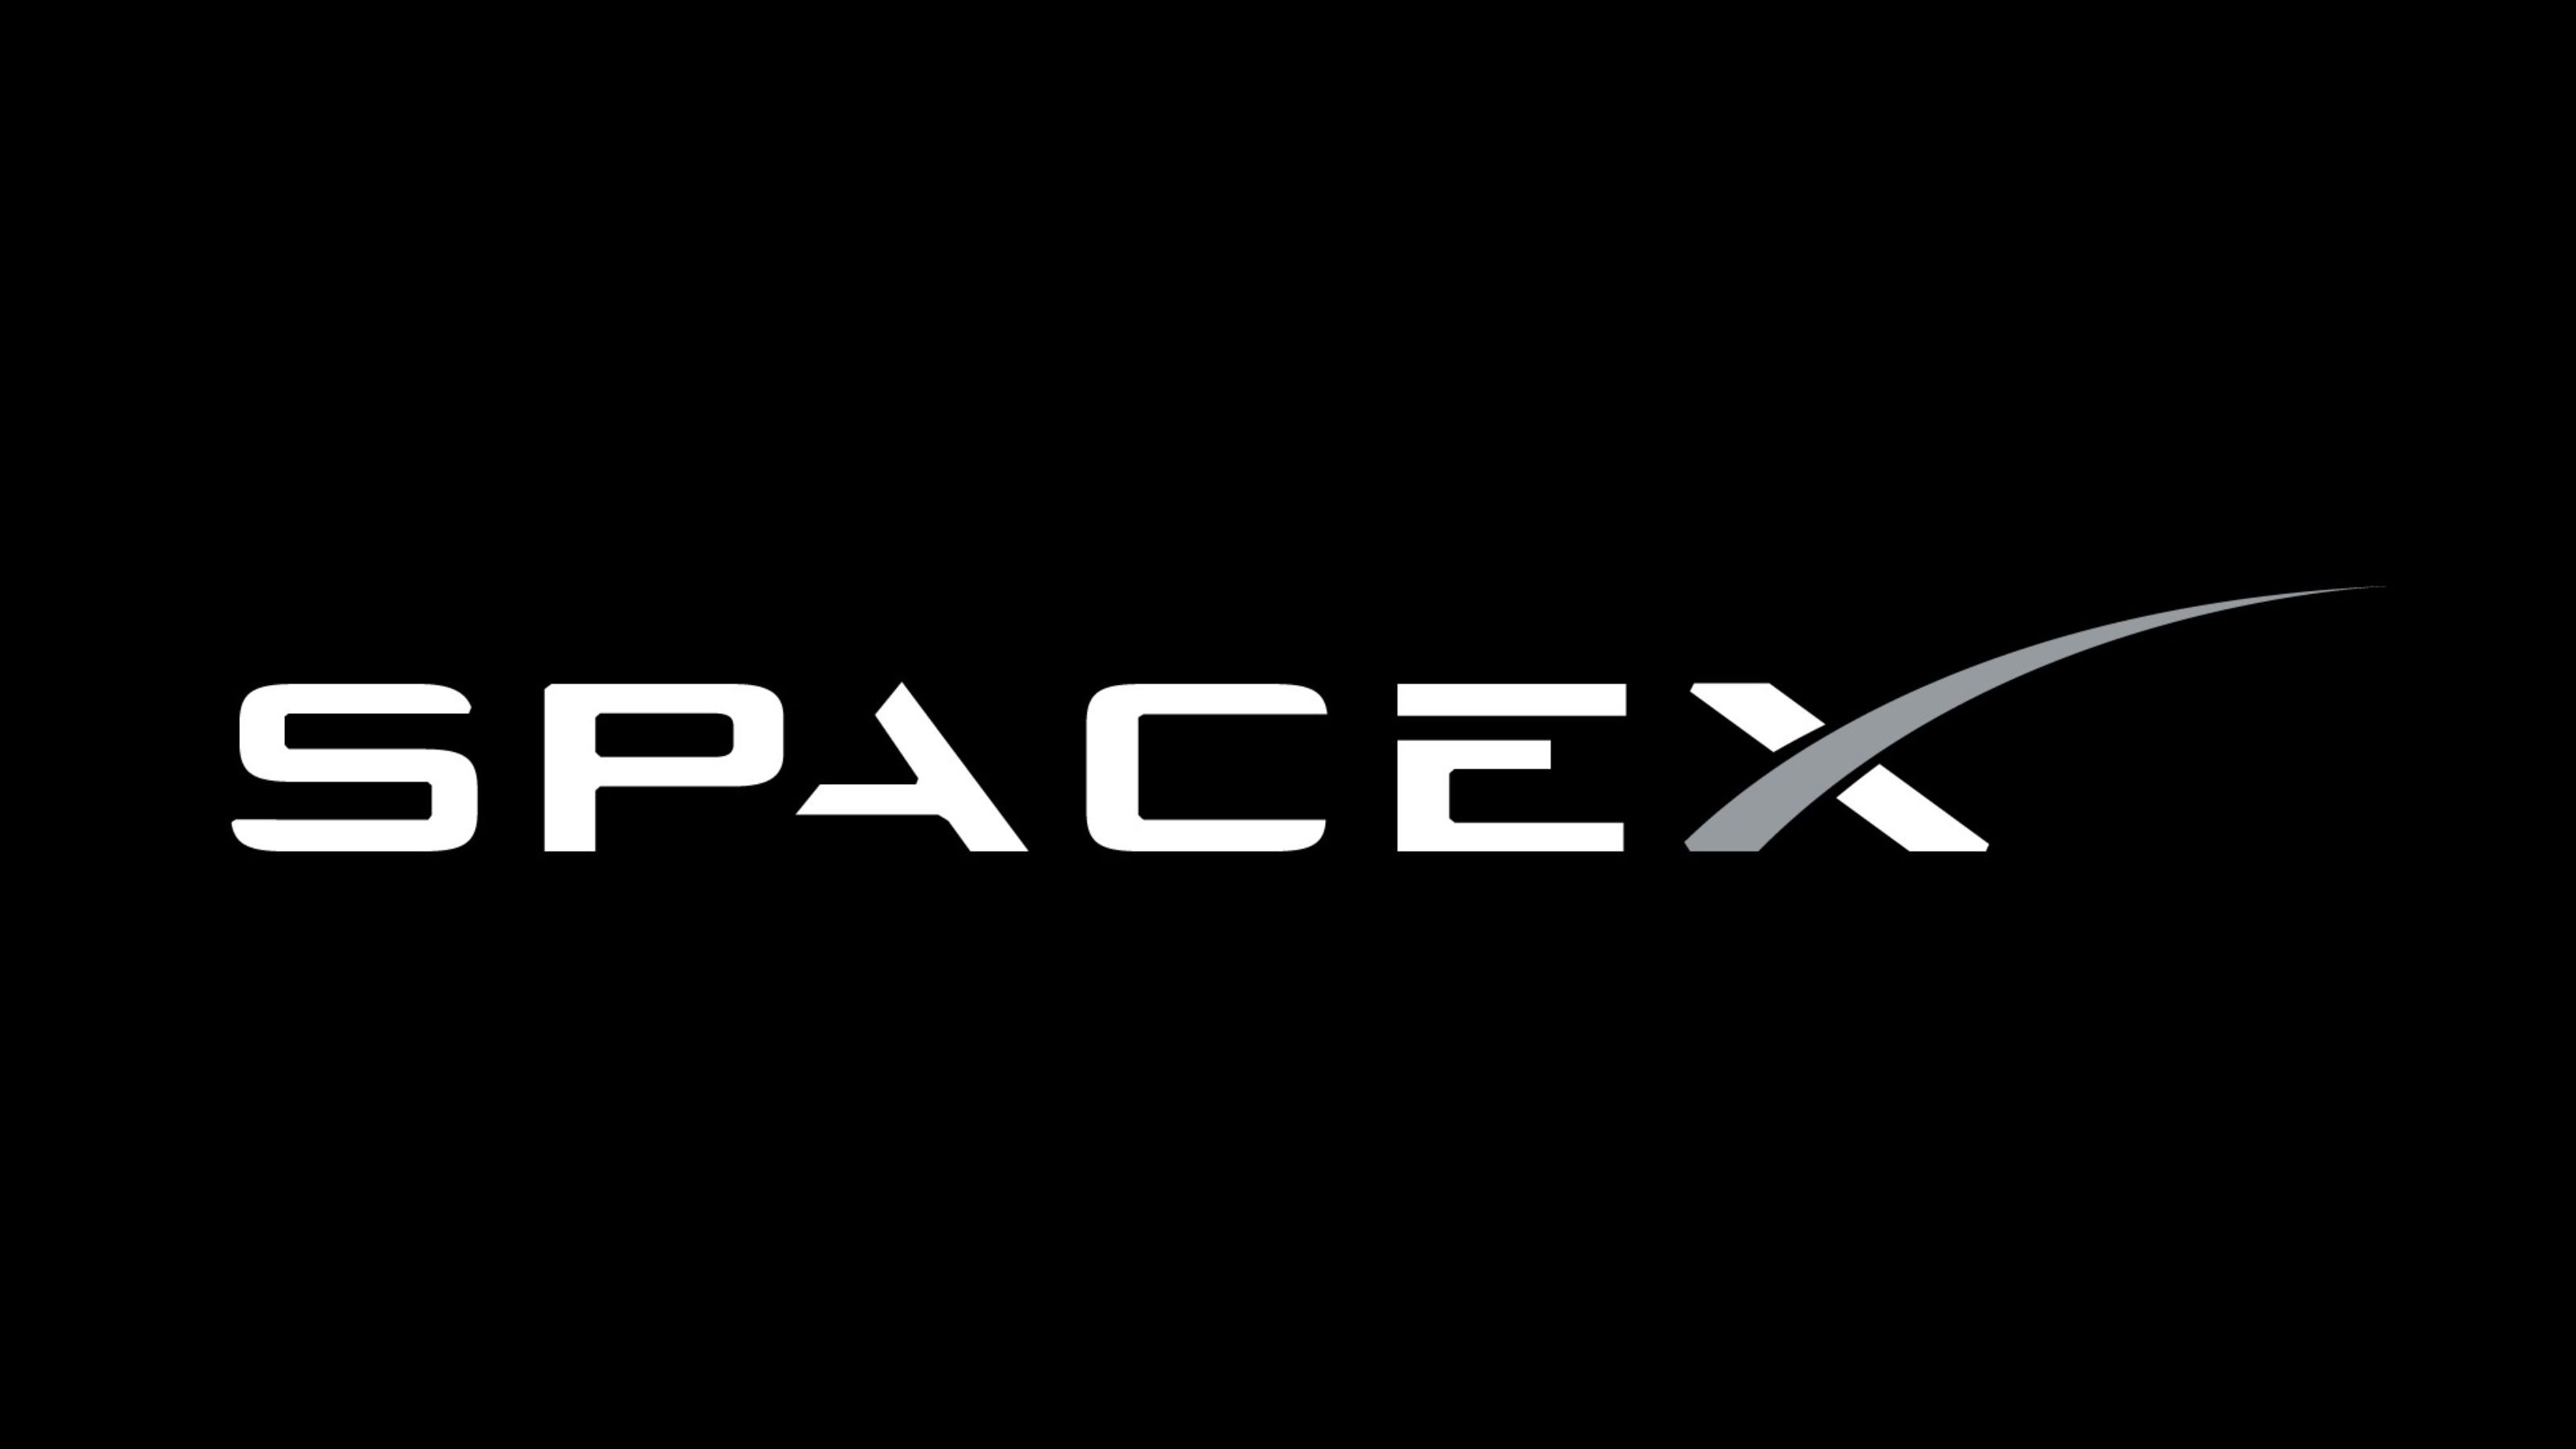 Spacex Logo Wallpaper Free Spacex Logo Background